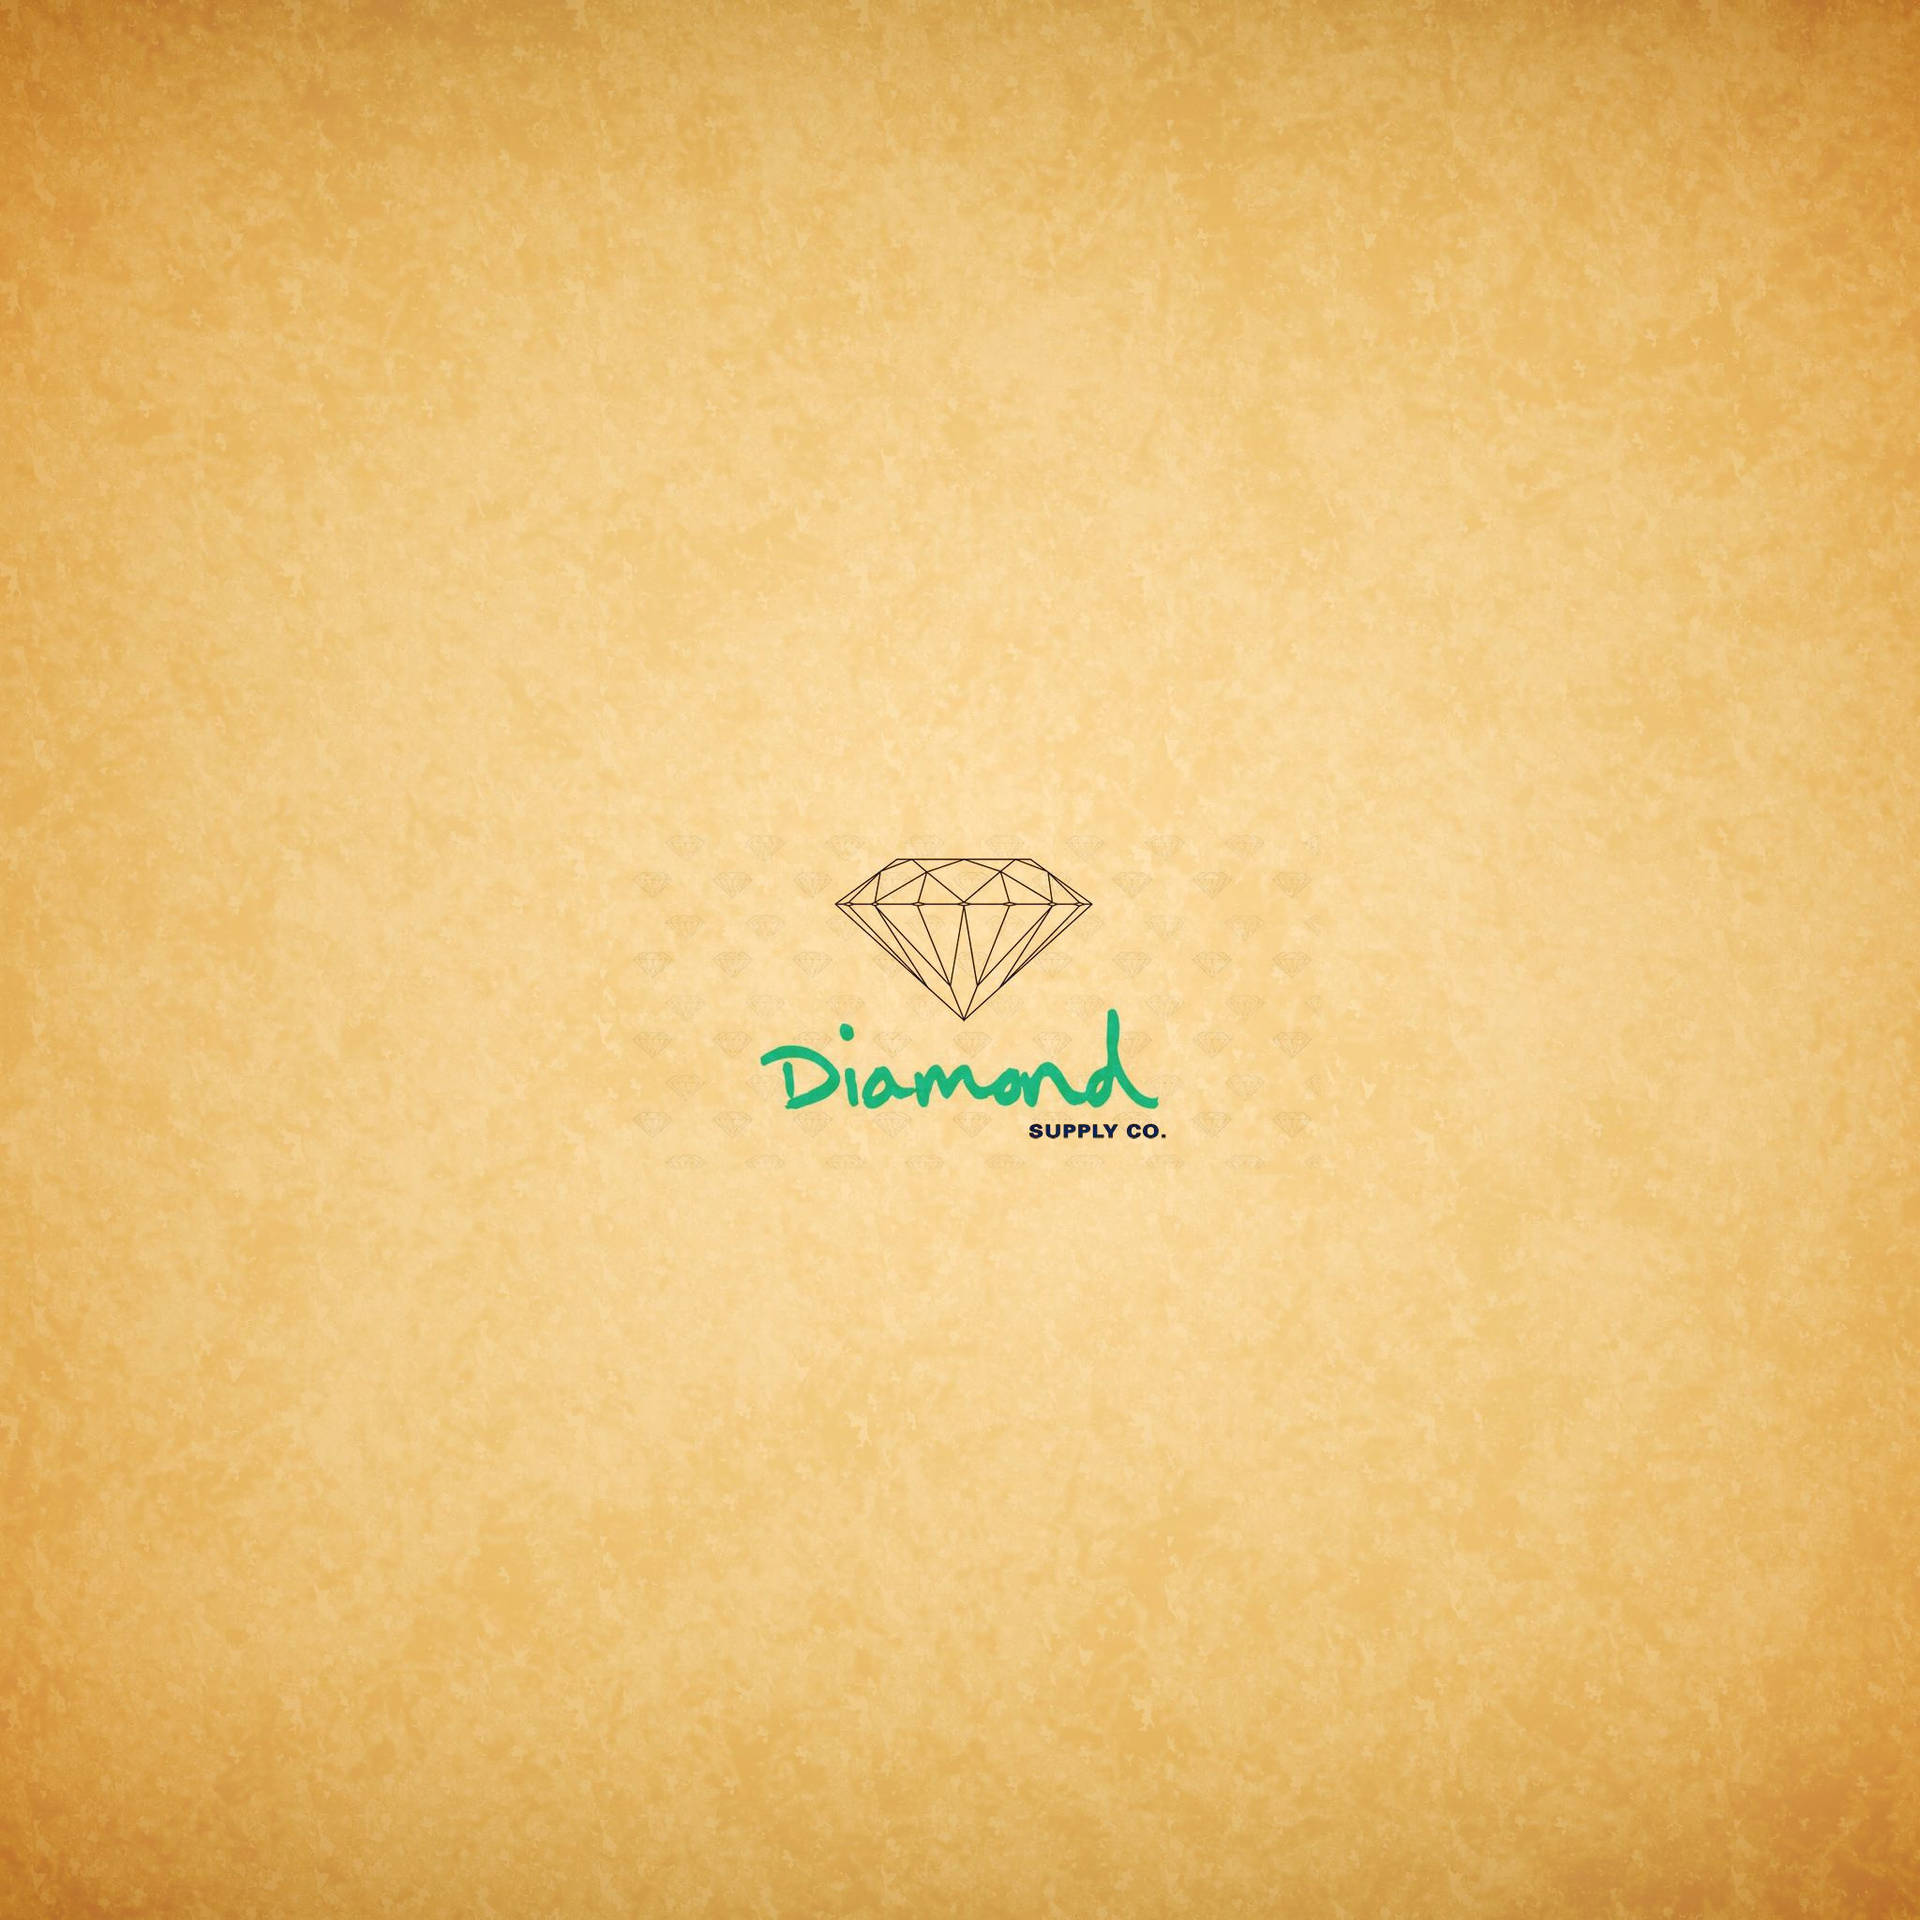 Aesthetic Diamond Supply Co Logo Wallpaper